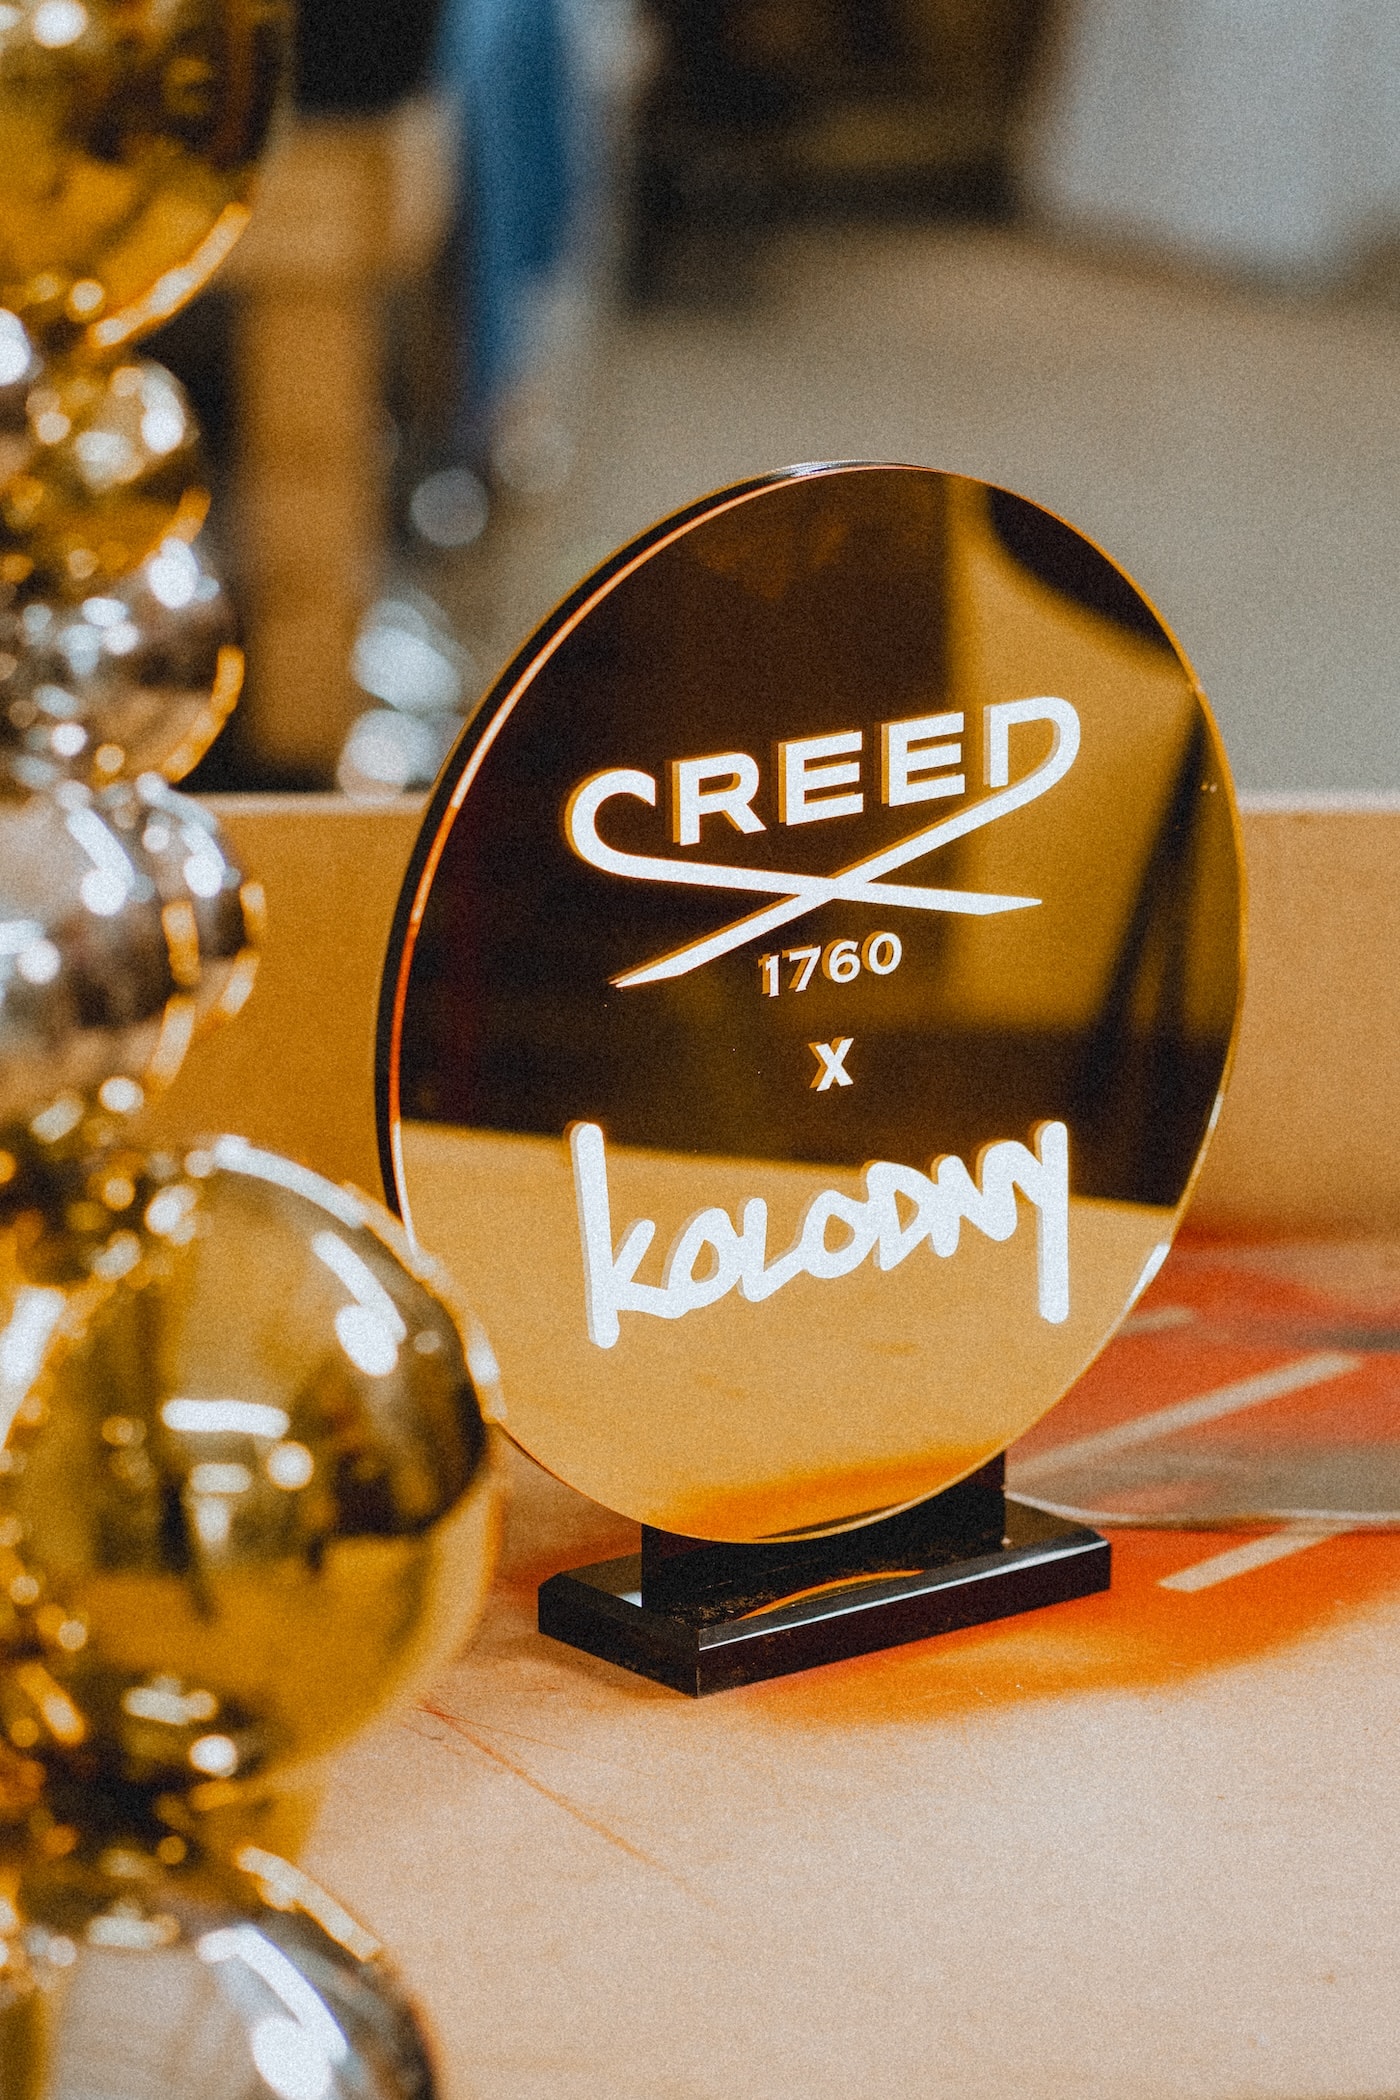 CREED 携手装置艺术家 Kolodny 呈现全新艺术合作